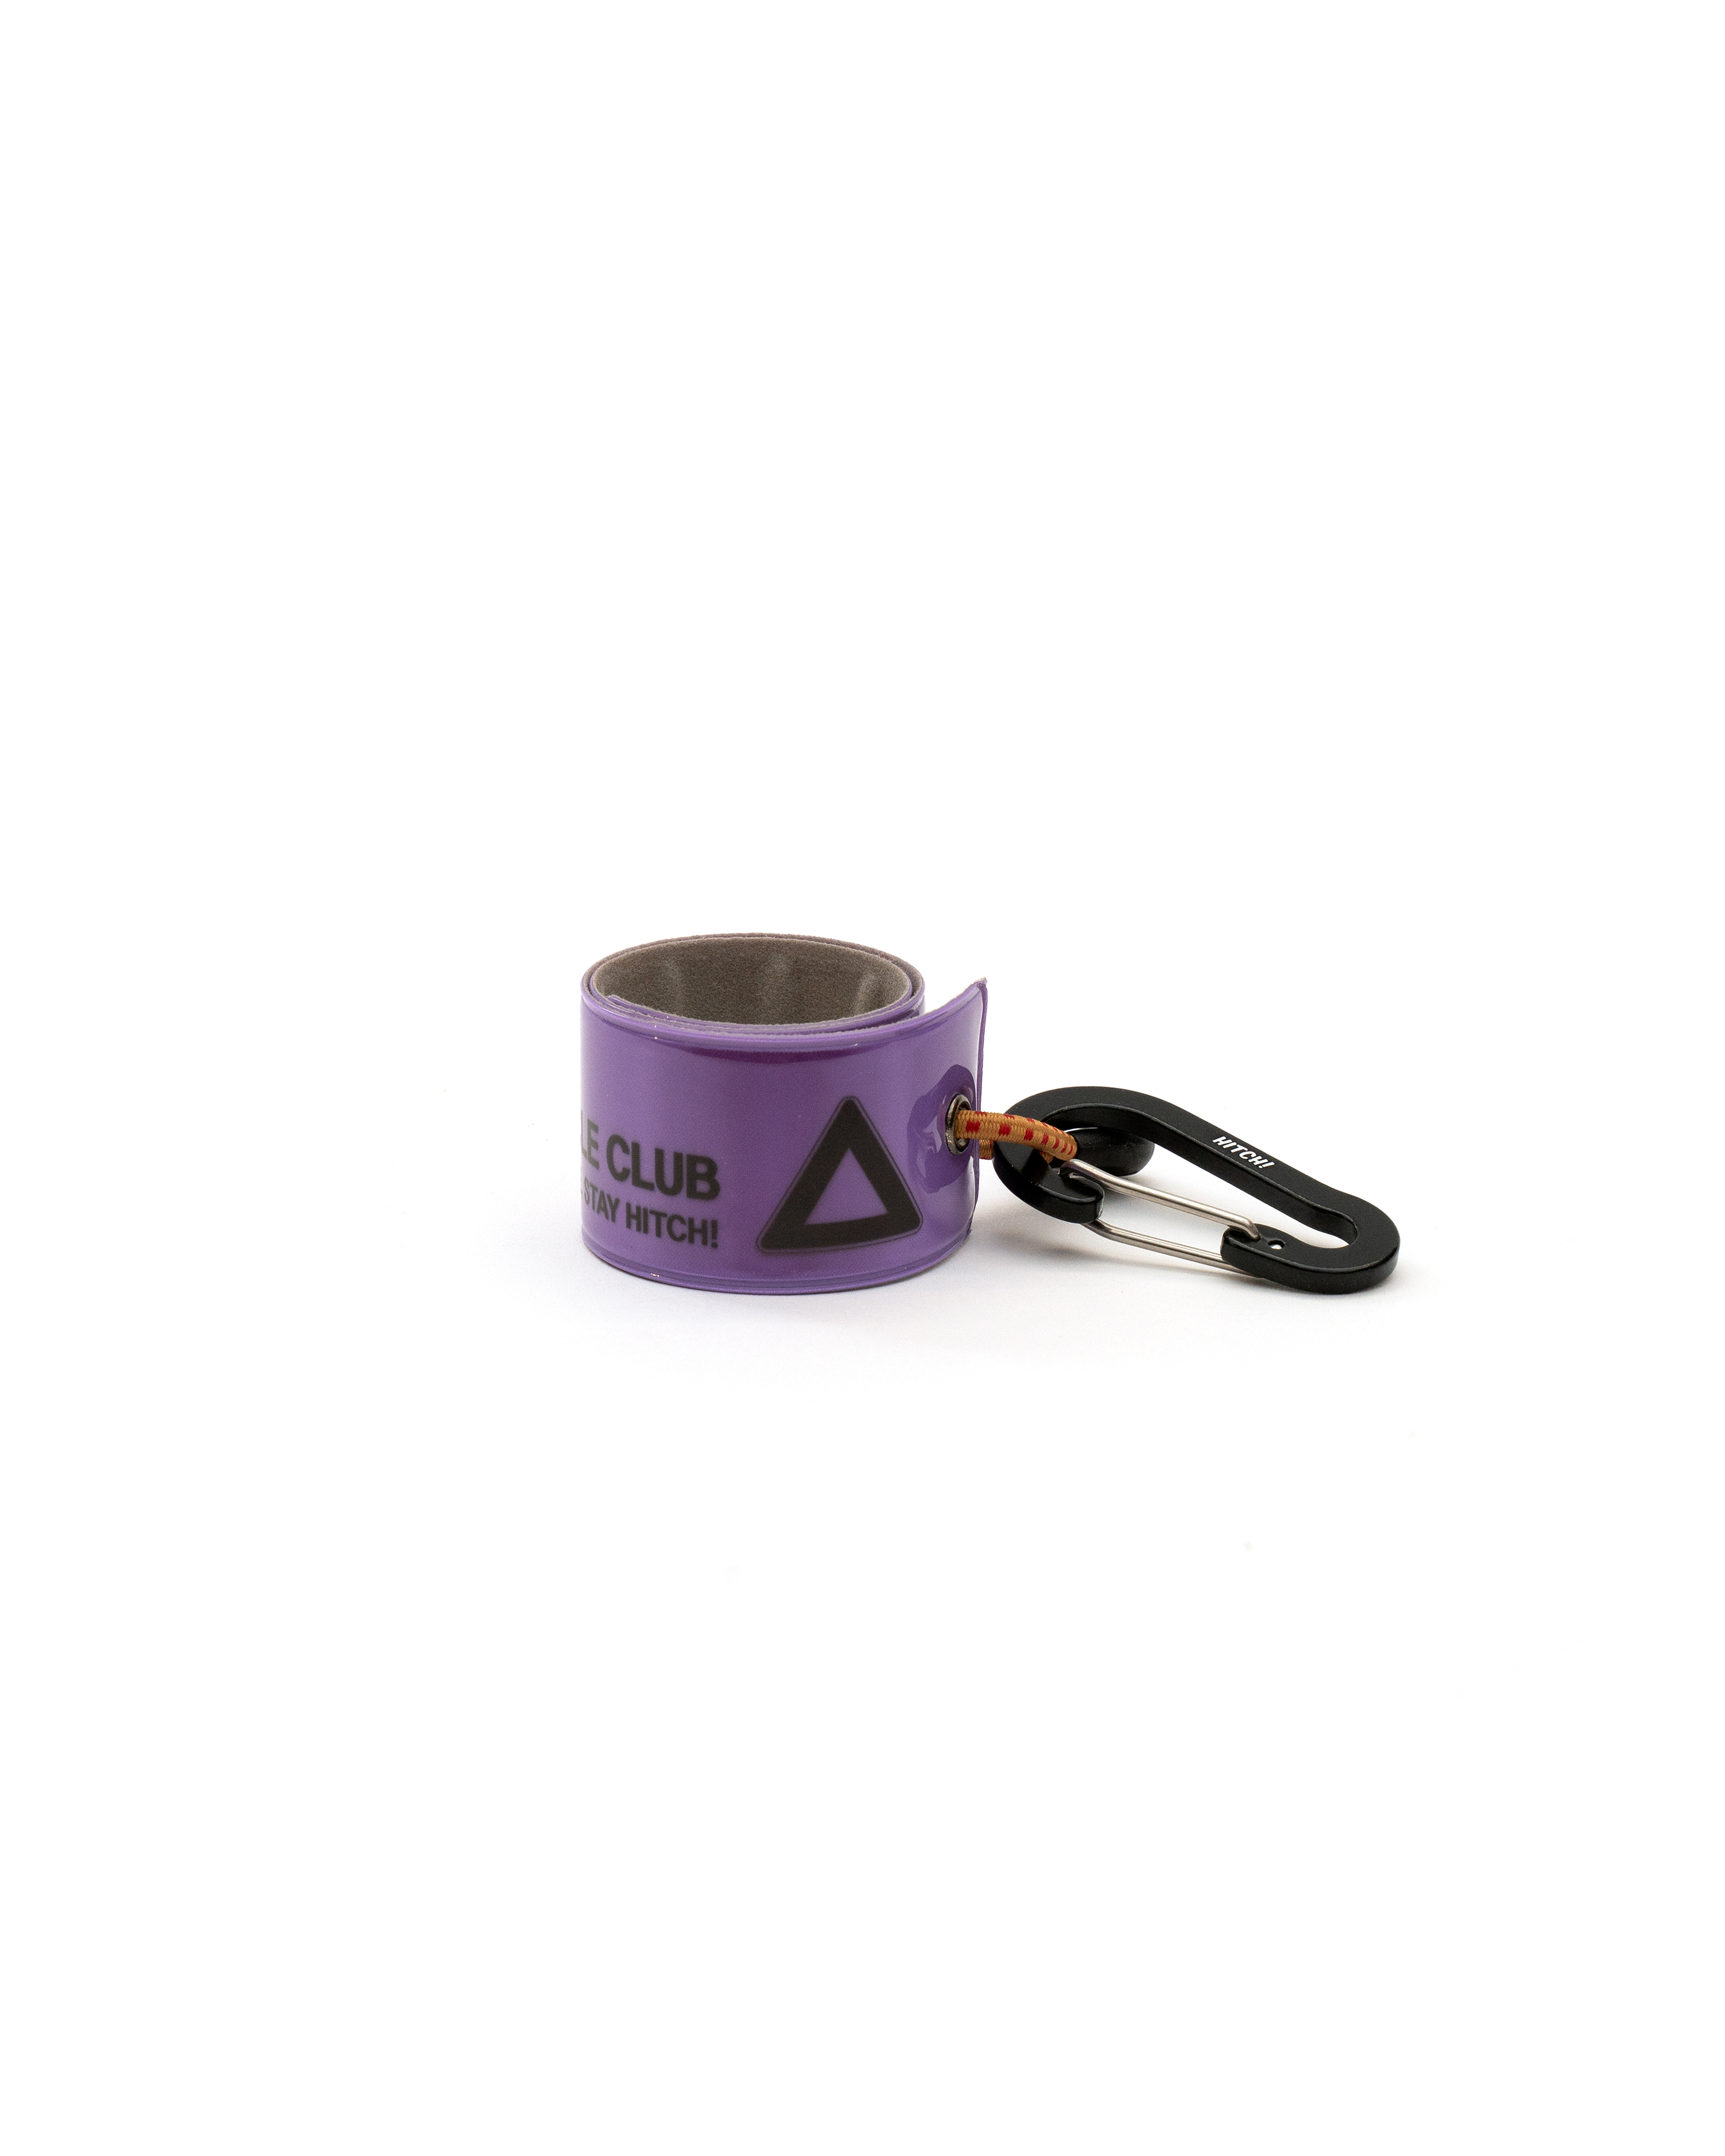 Reflector slapband - purple